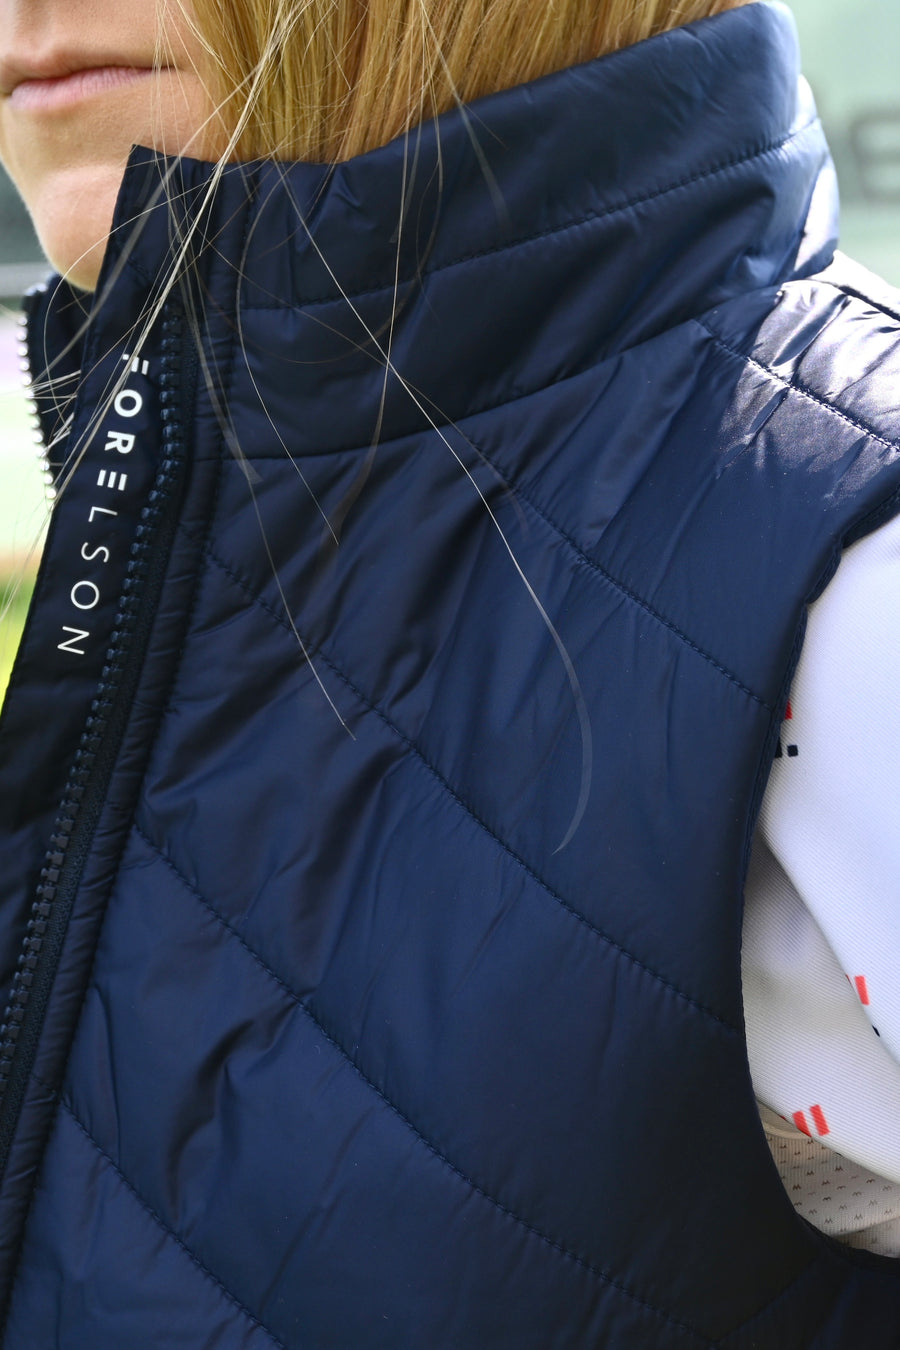 Women's navy golf gilet. Lightweight material, zip up with pockets. 